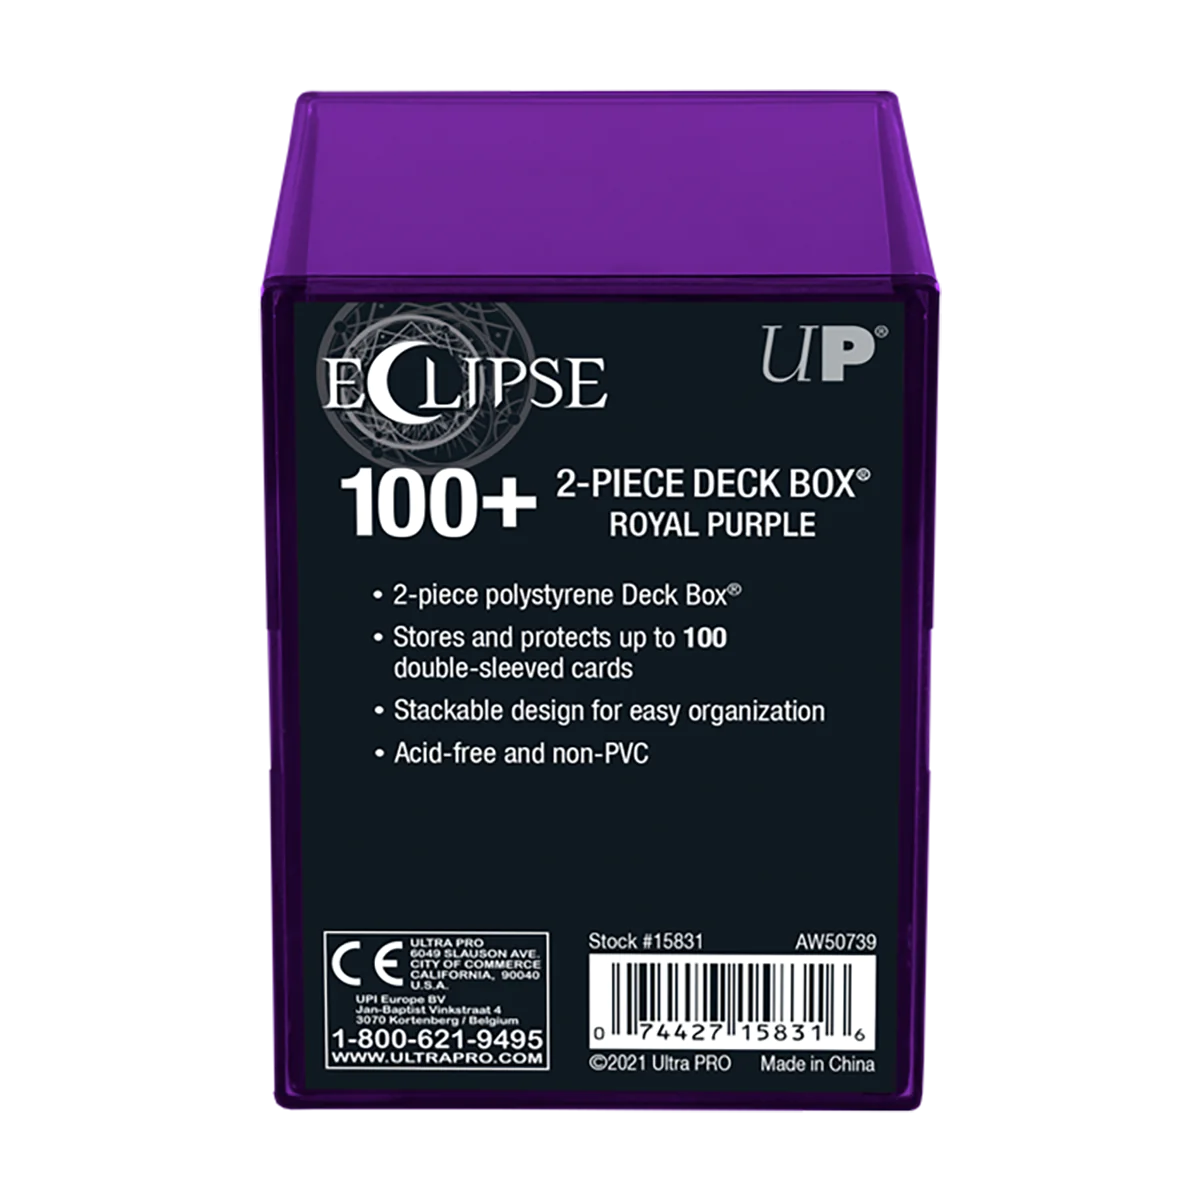 Ultra-Pro Eclipse 2-Piece 100+ Deck Box (Royal Purple)